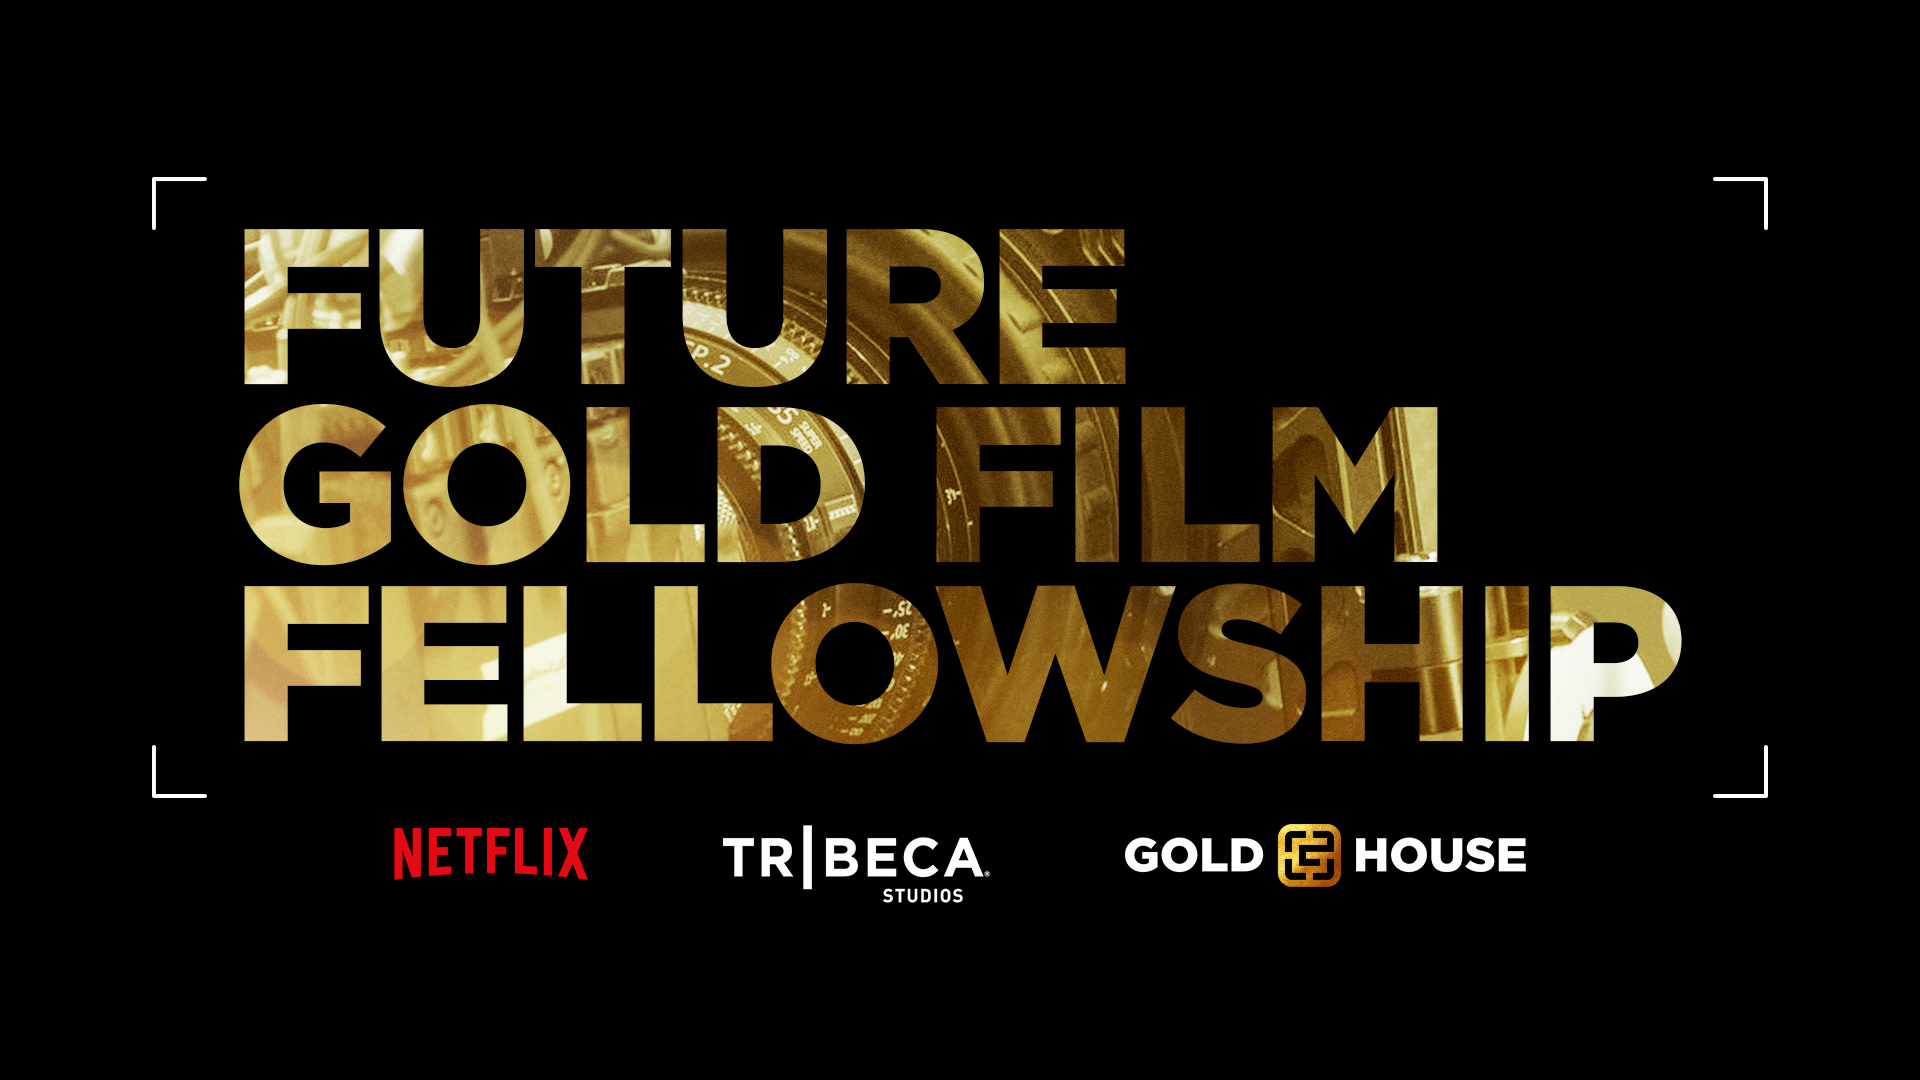 Netflix, Tribeca Studios and Gold House Introduce the Future Gold Film Fellowship Program